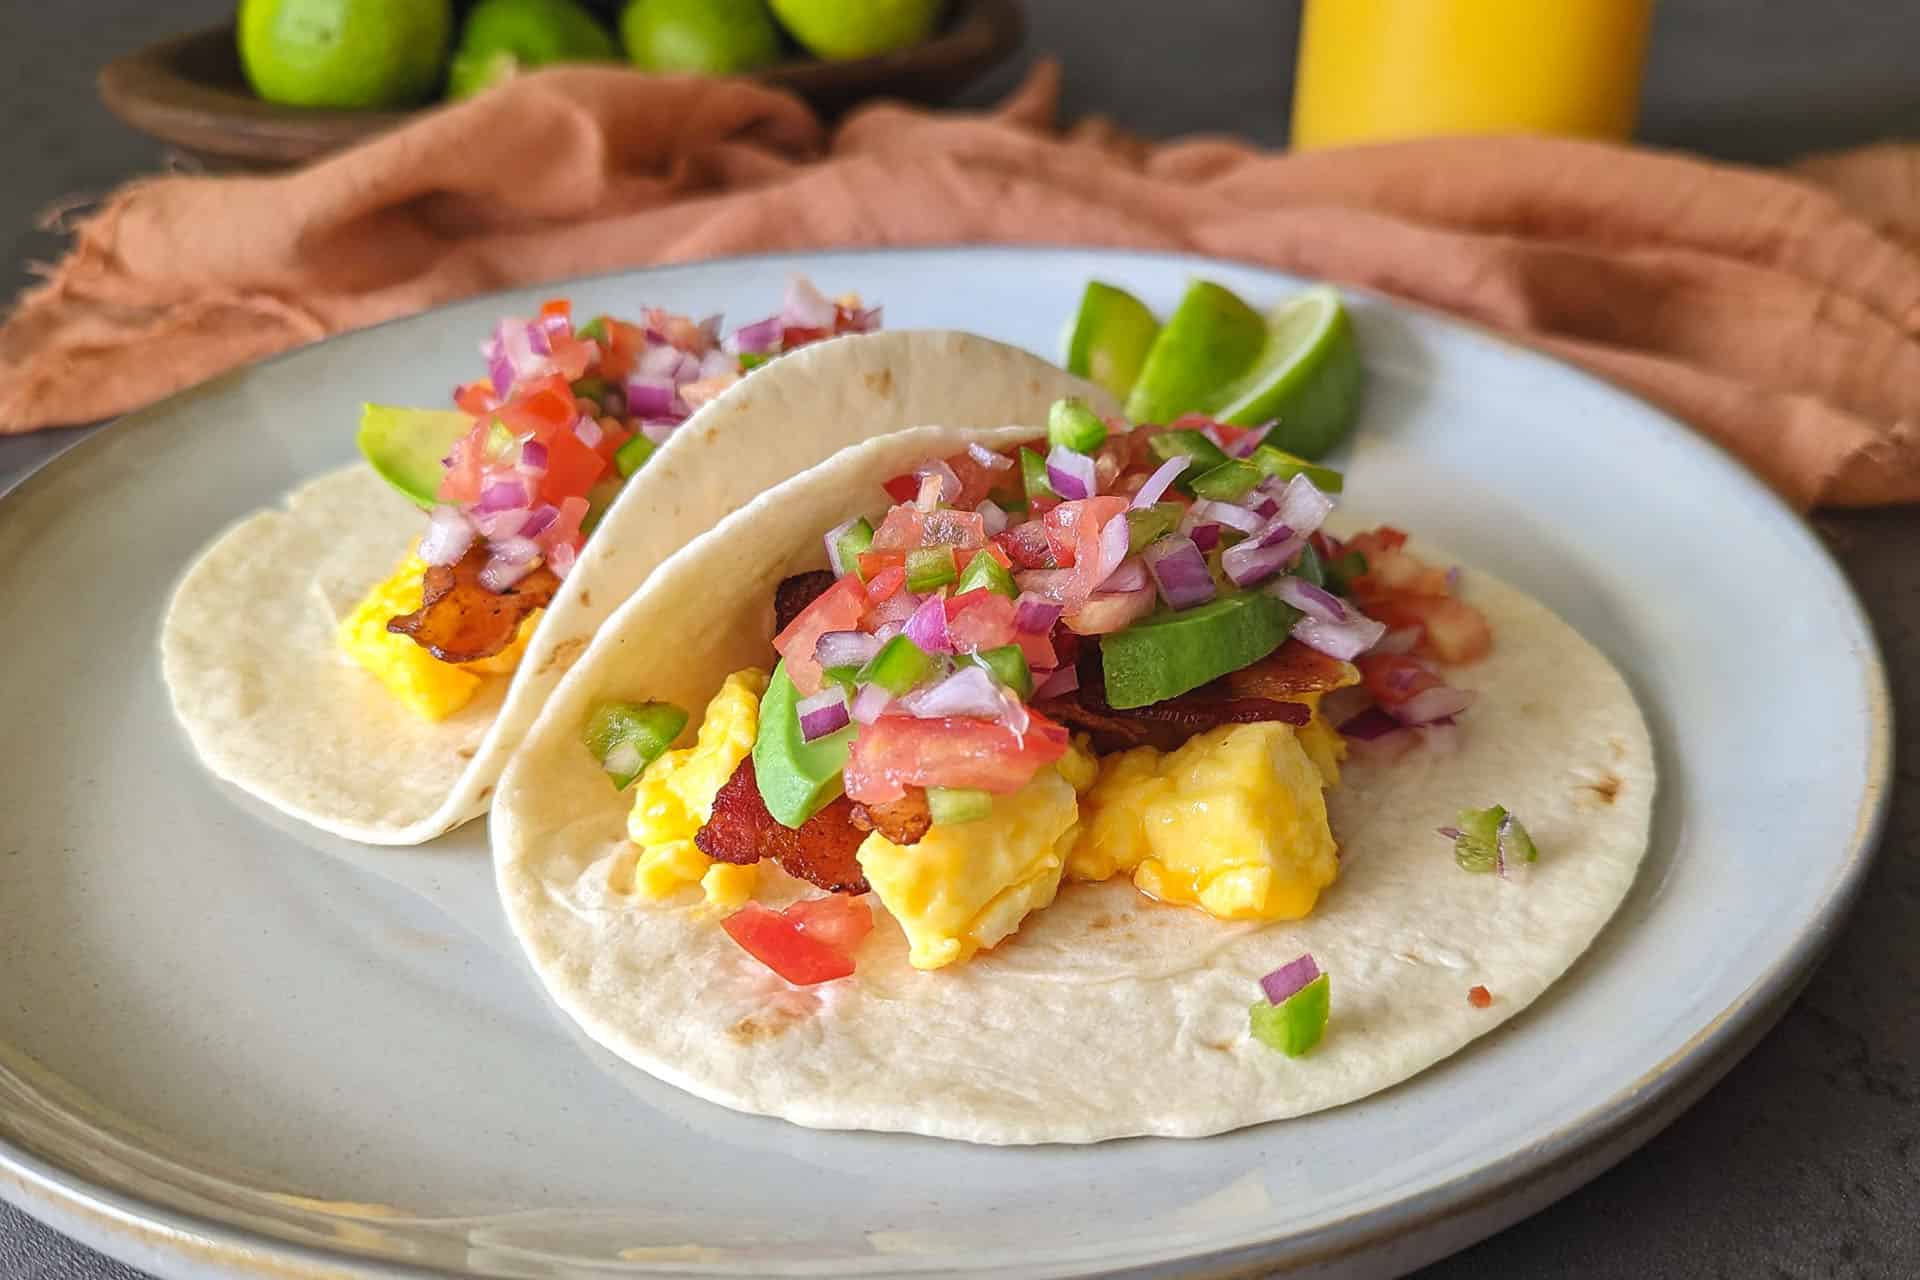 Two breakfast tacos filled with eggs, bacon, avocado, and pico de gallo